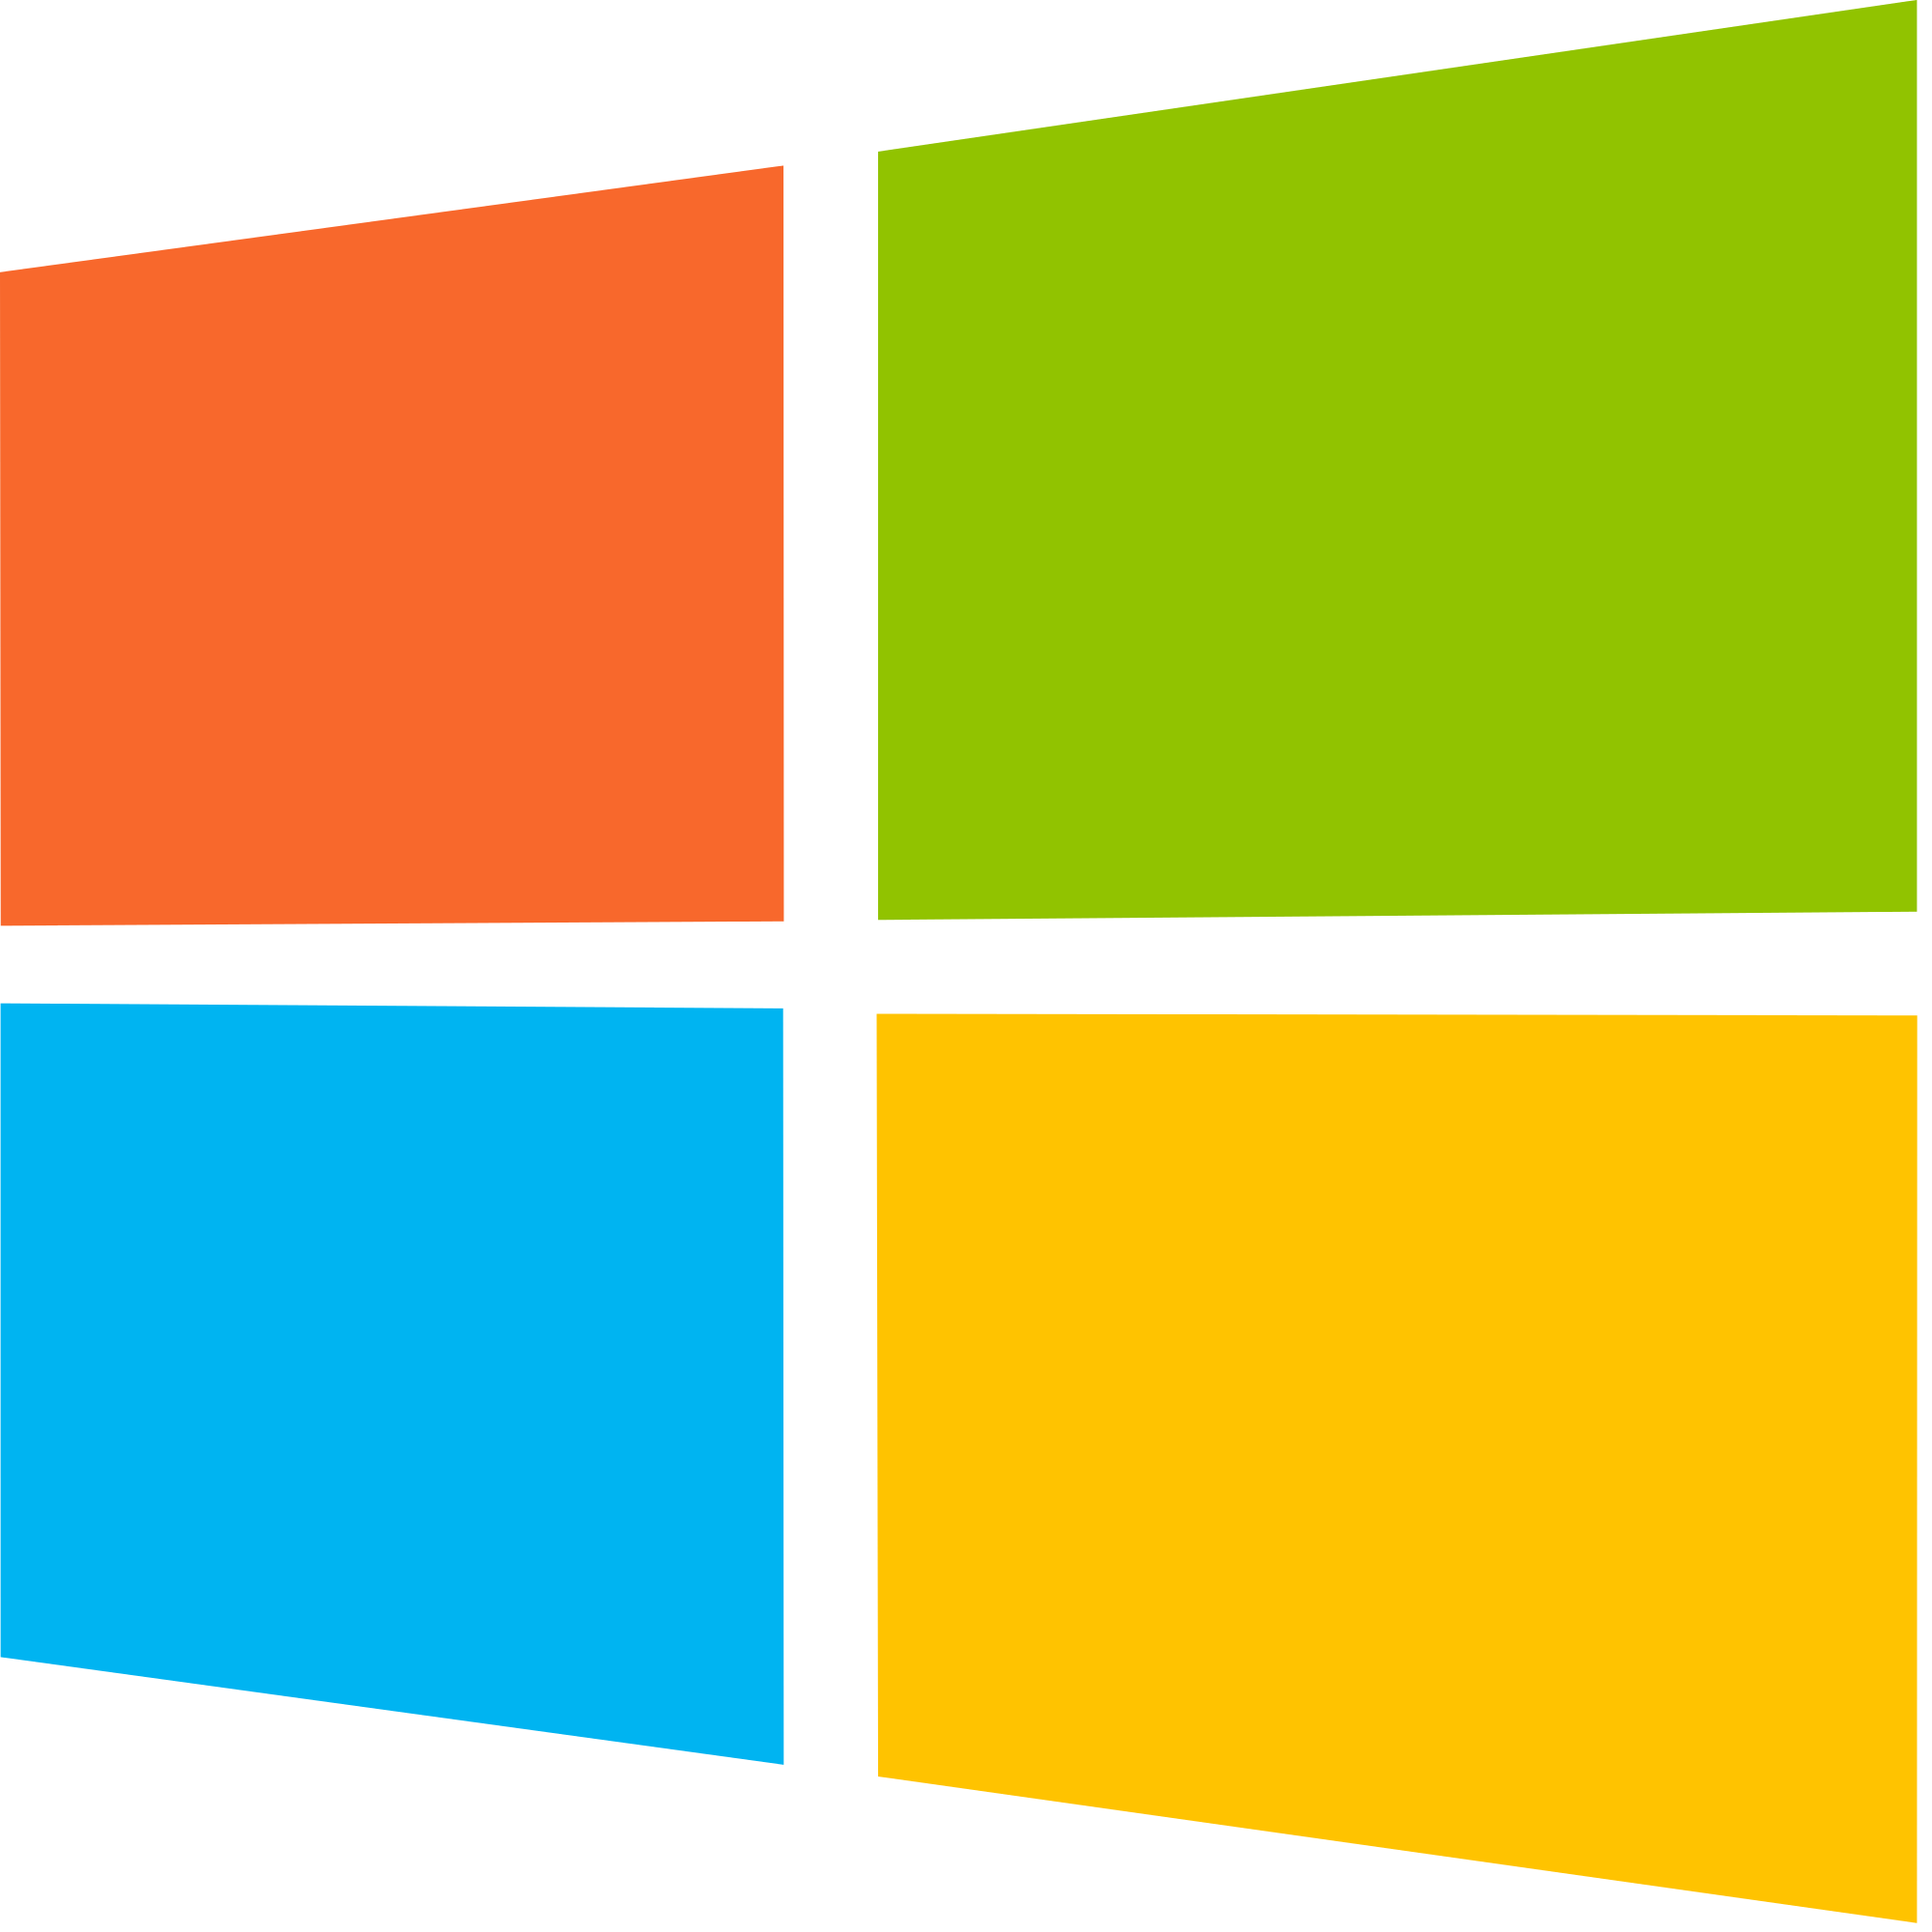 ОС Microsoft Windows 10. Microsoft Windows logo. Windows 10 logo. Значок виндовс 12. Знак майкрософт